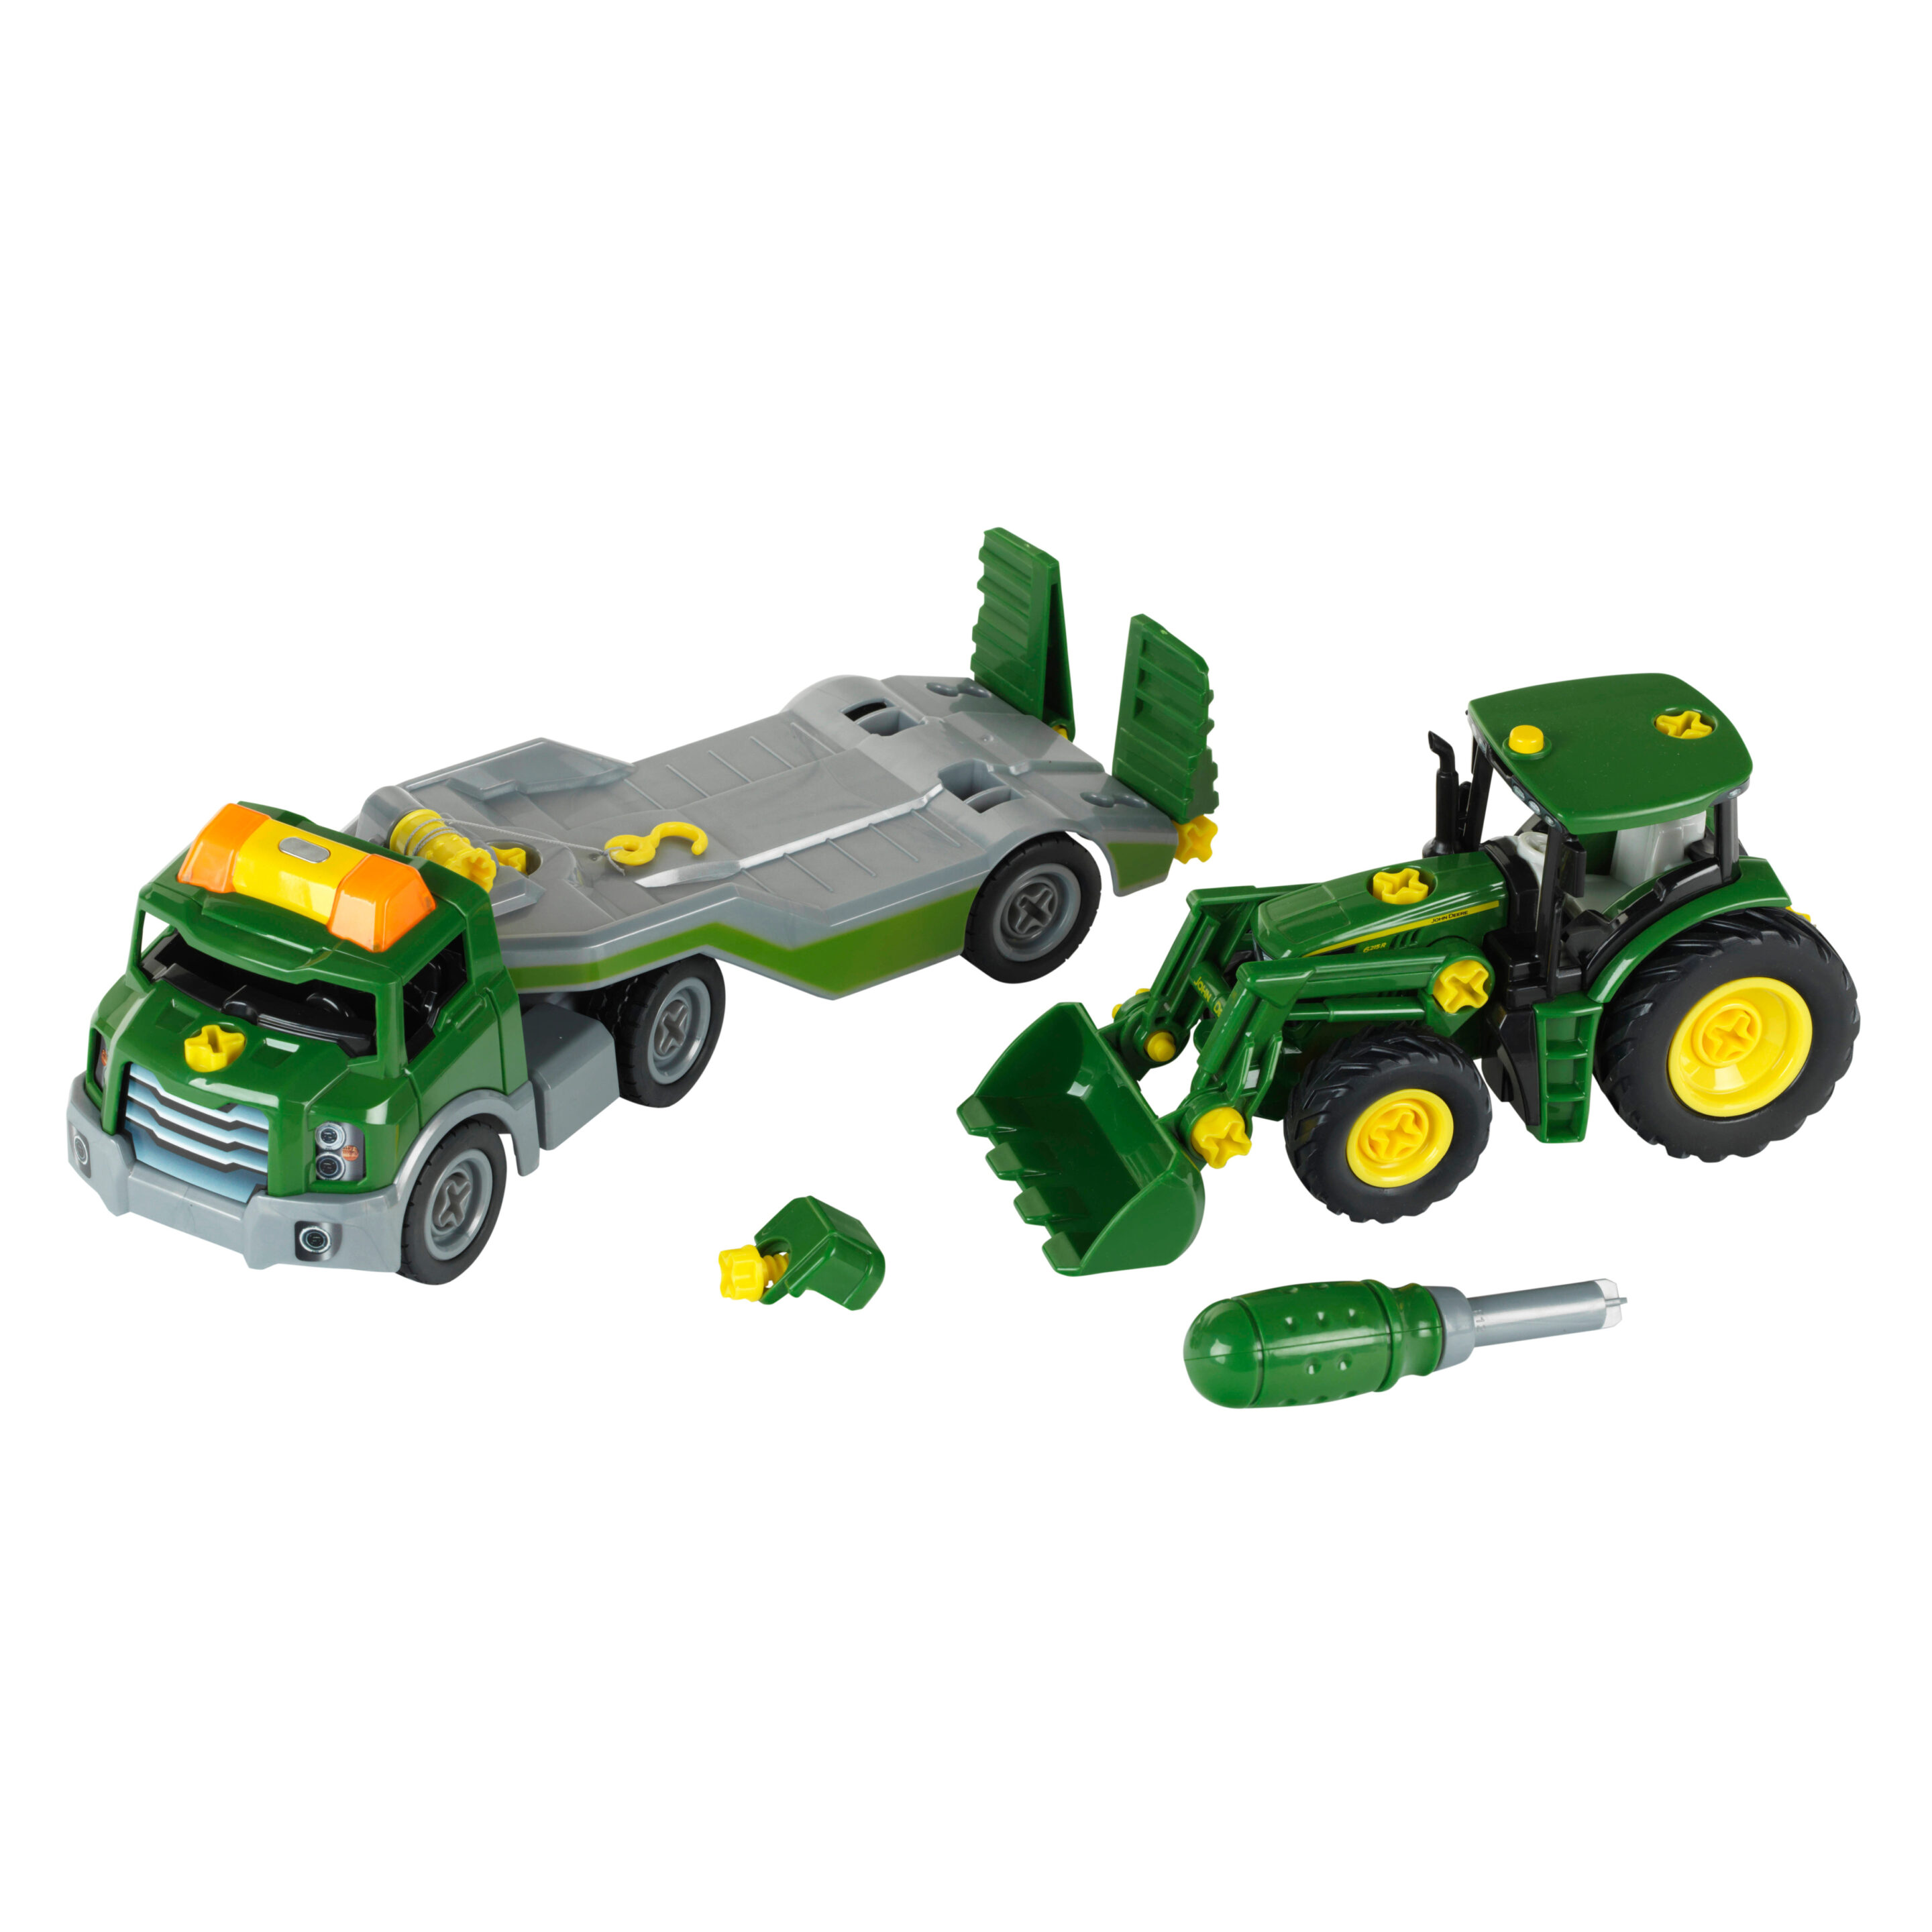 John Deere - Traktor mit Transporter, 1:24